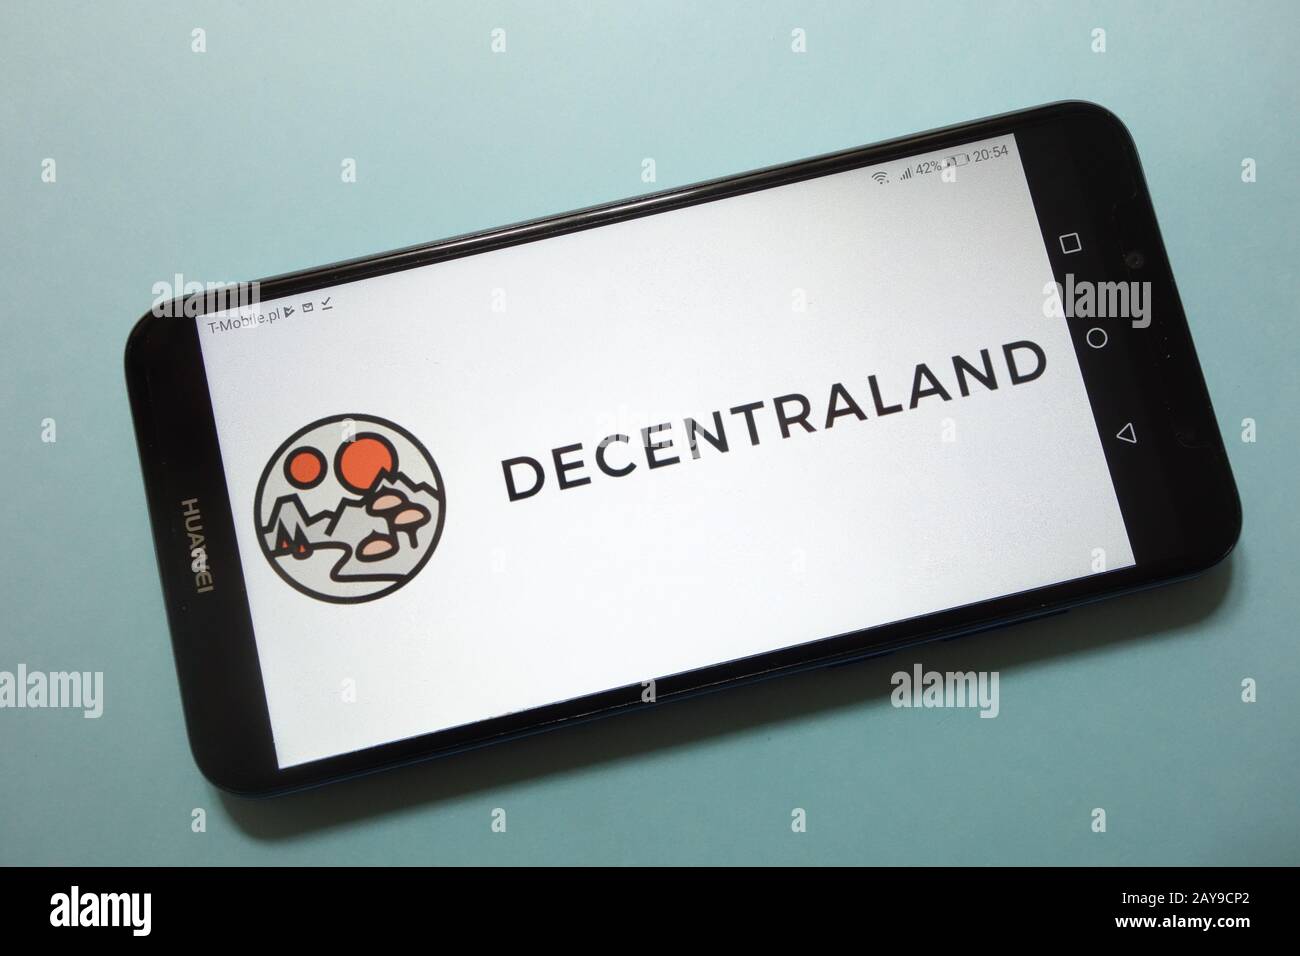 Decentraland (MANA) cryptocurrency logo displayed on smartphone Stock Photo